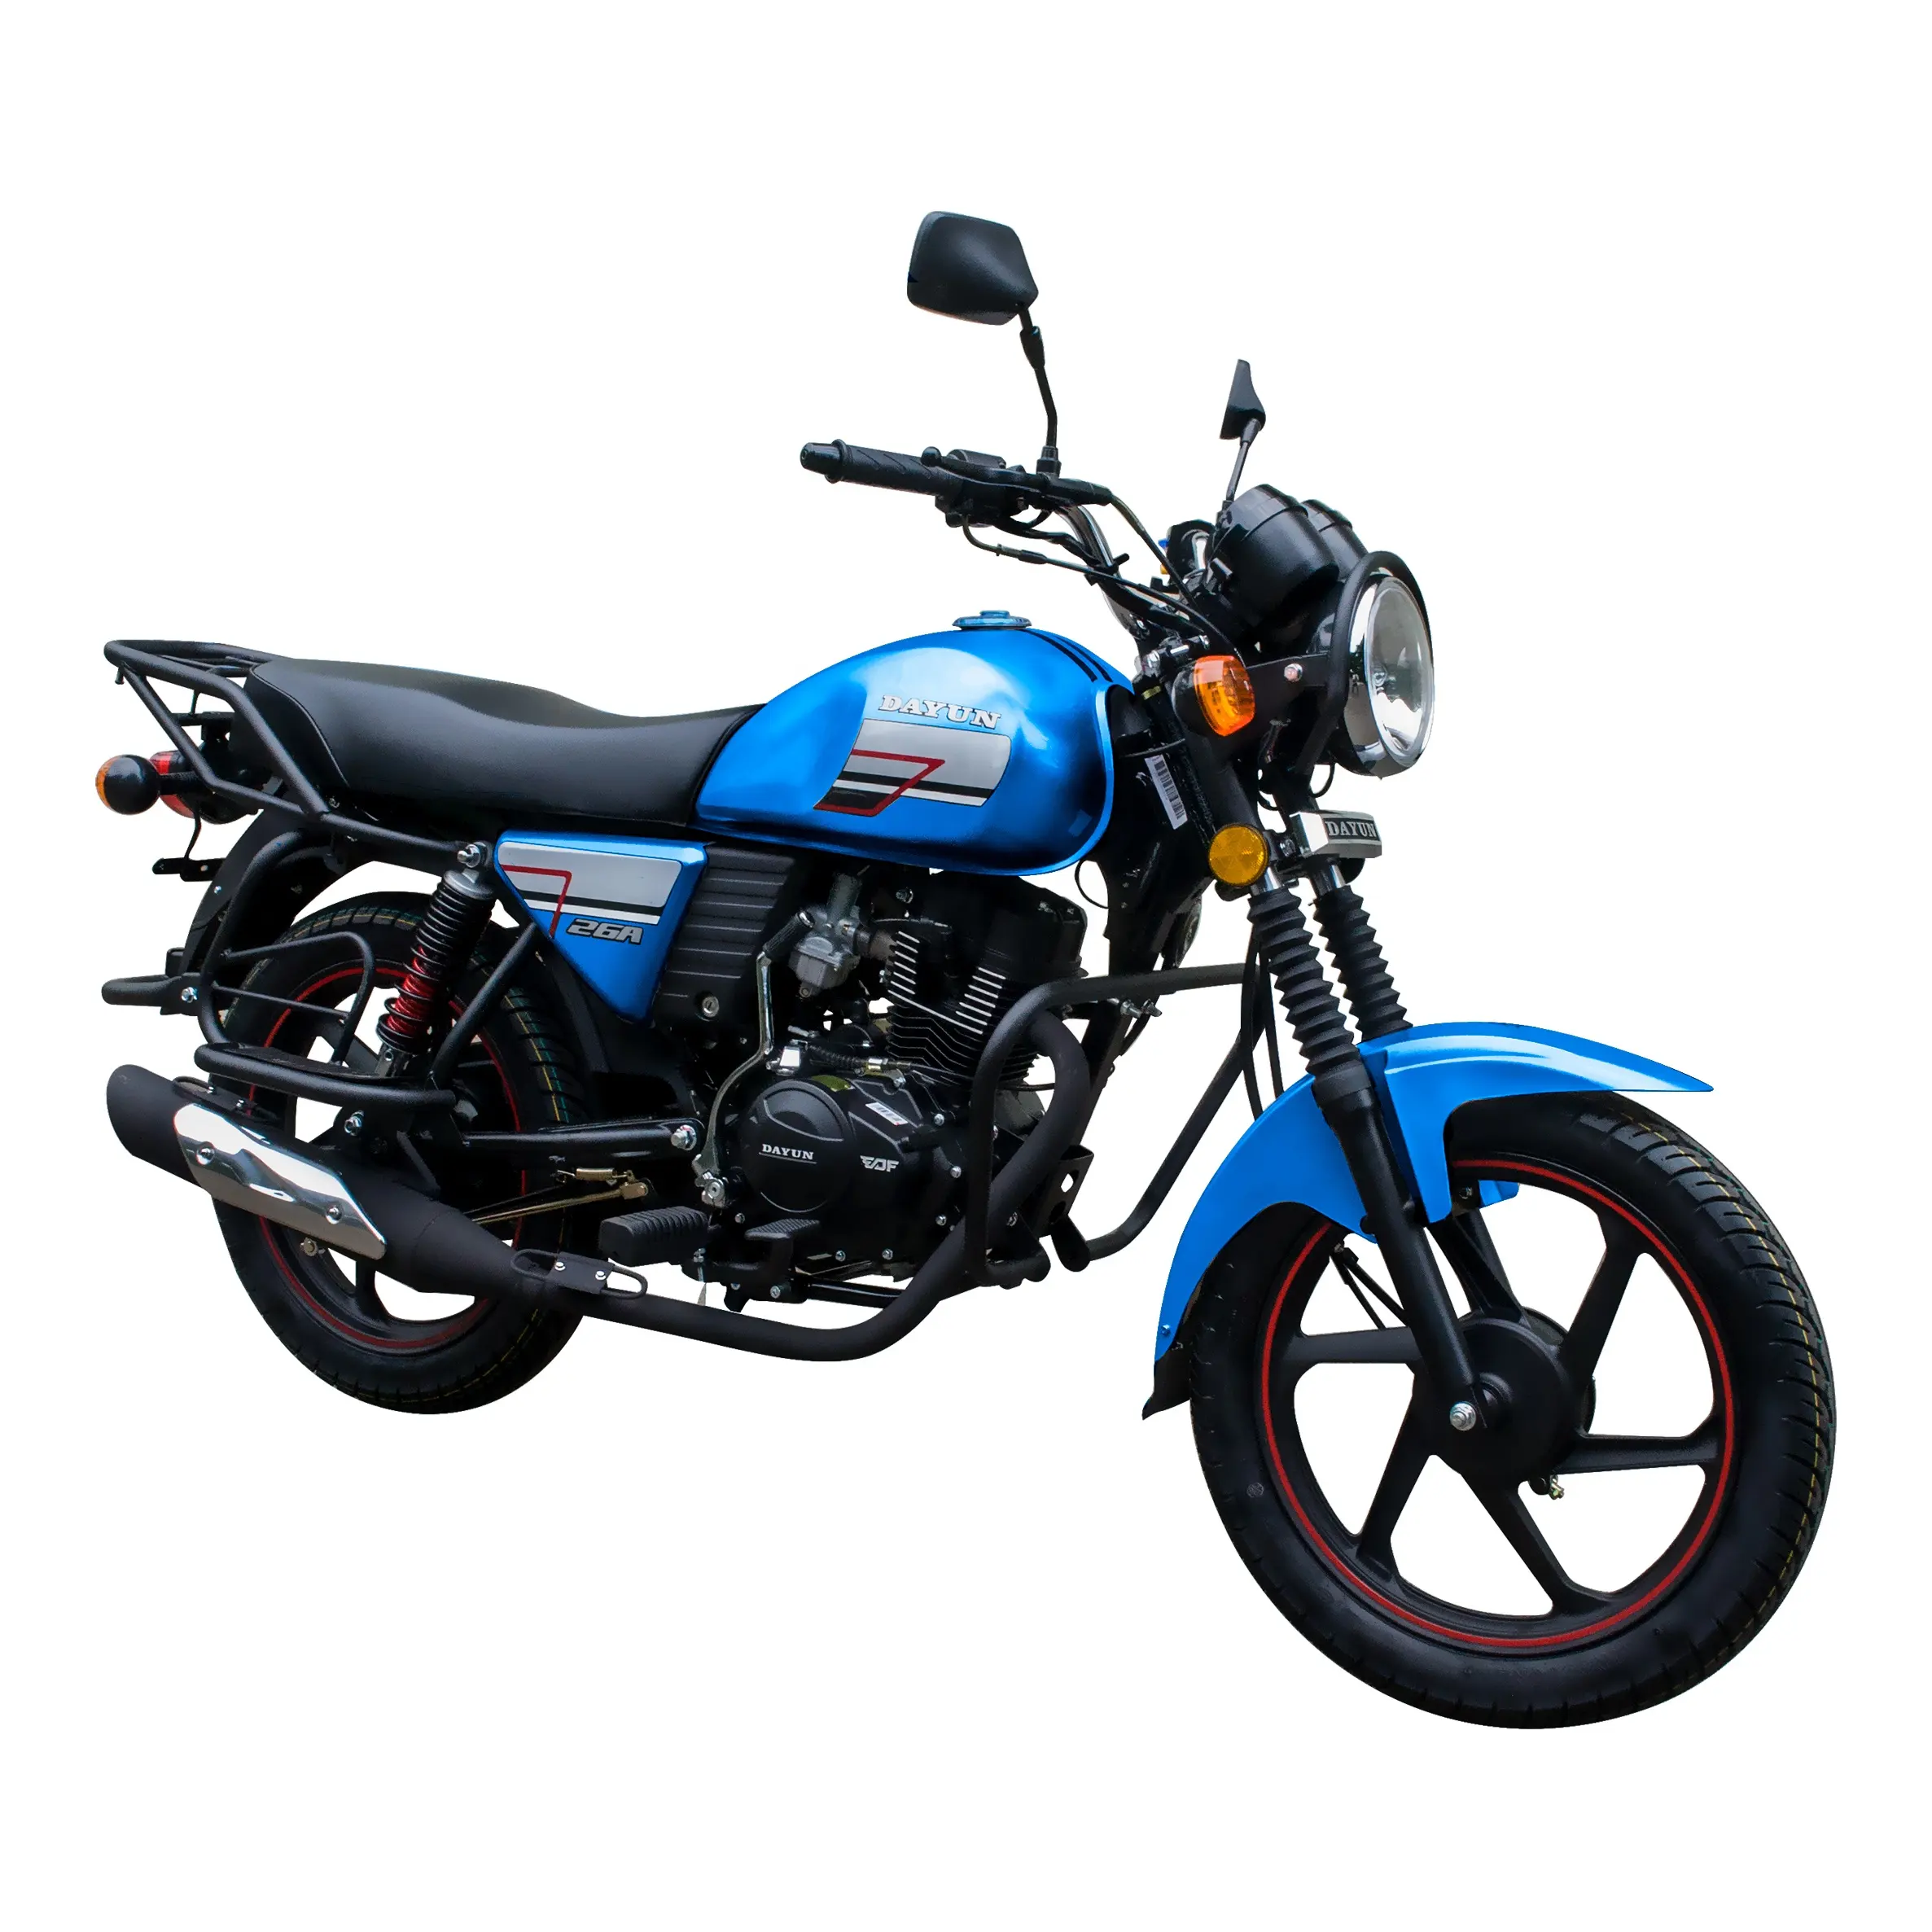 DAYUN 150cc BOXER低燃料消費バイク/二輪バイクDY150-26A売れ筋高性能ガソリン